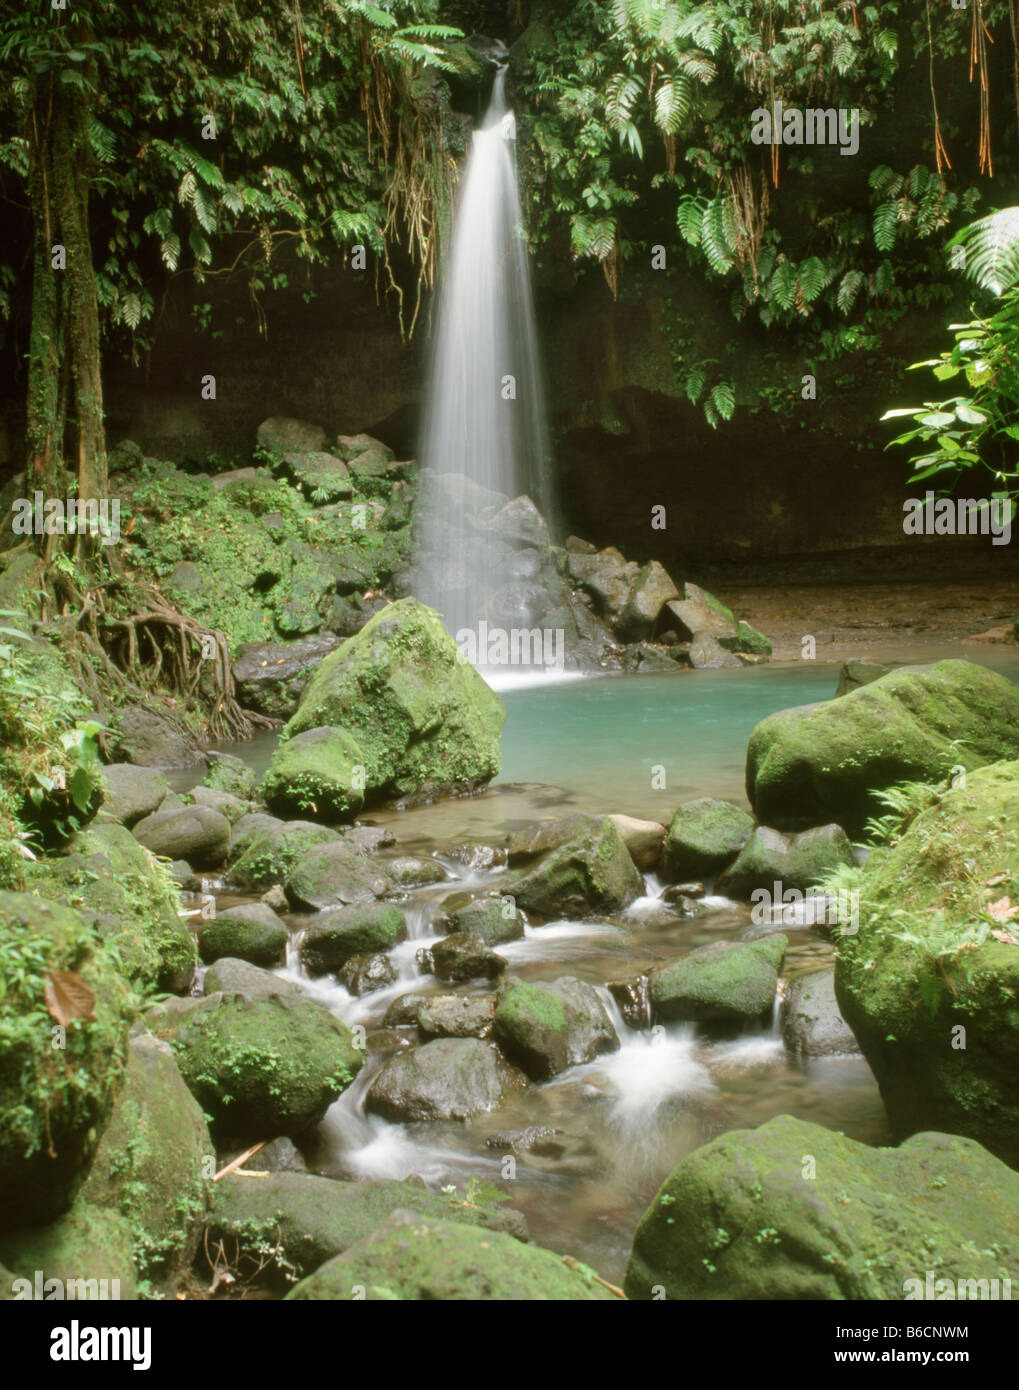 Dominica Emerald pool Stock Photo - Alamy